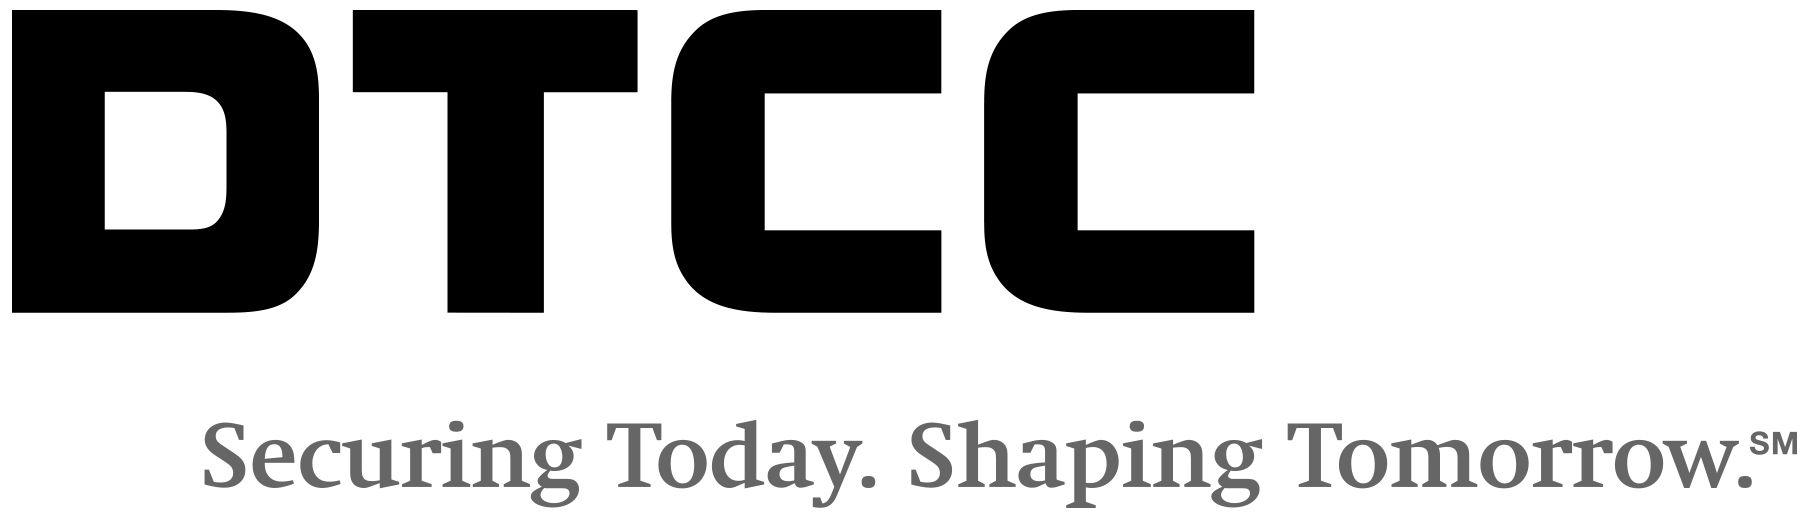 DTCC Logo - dtcc-logo - Brinqa